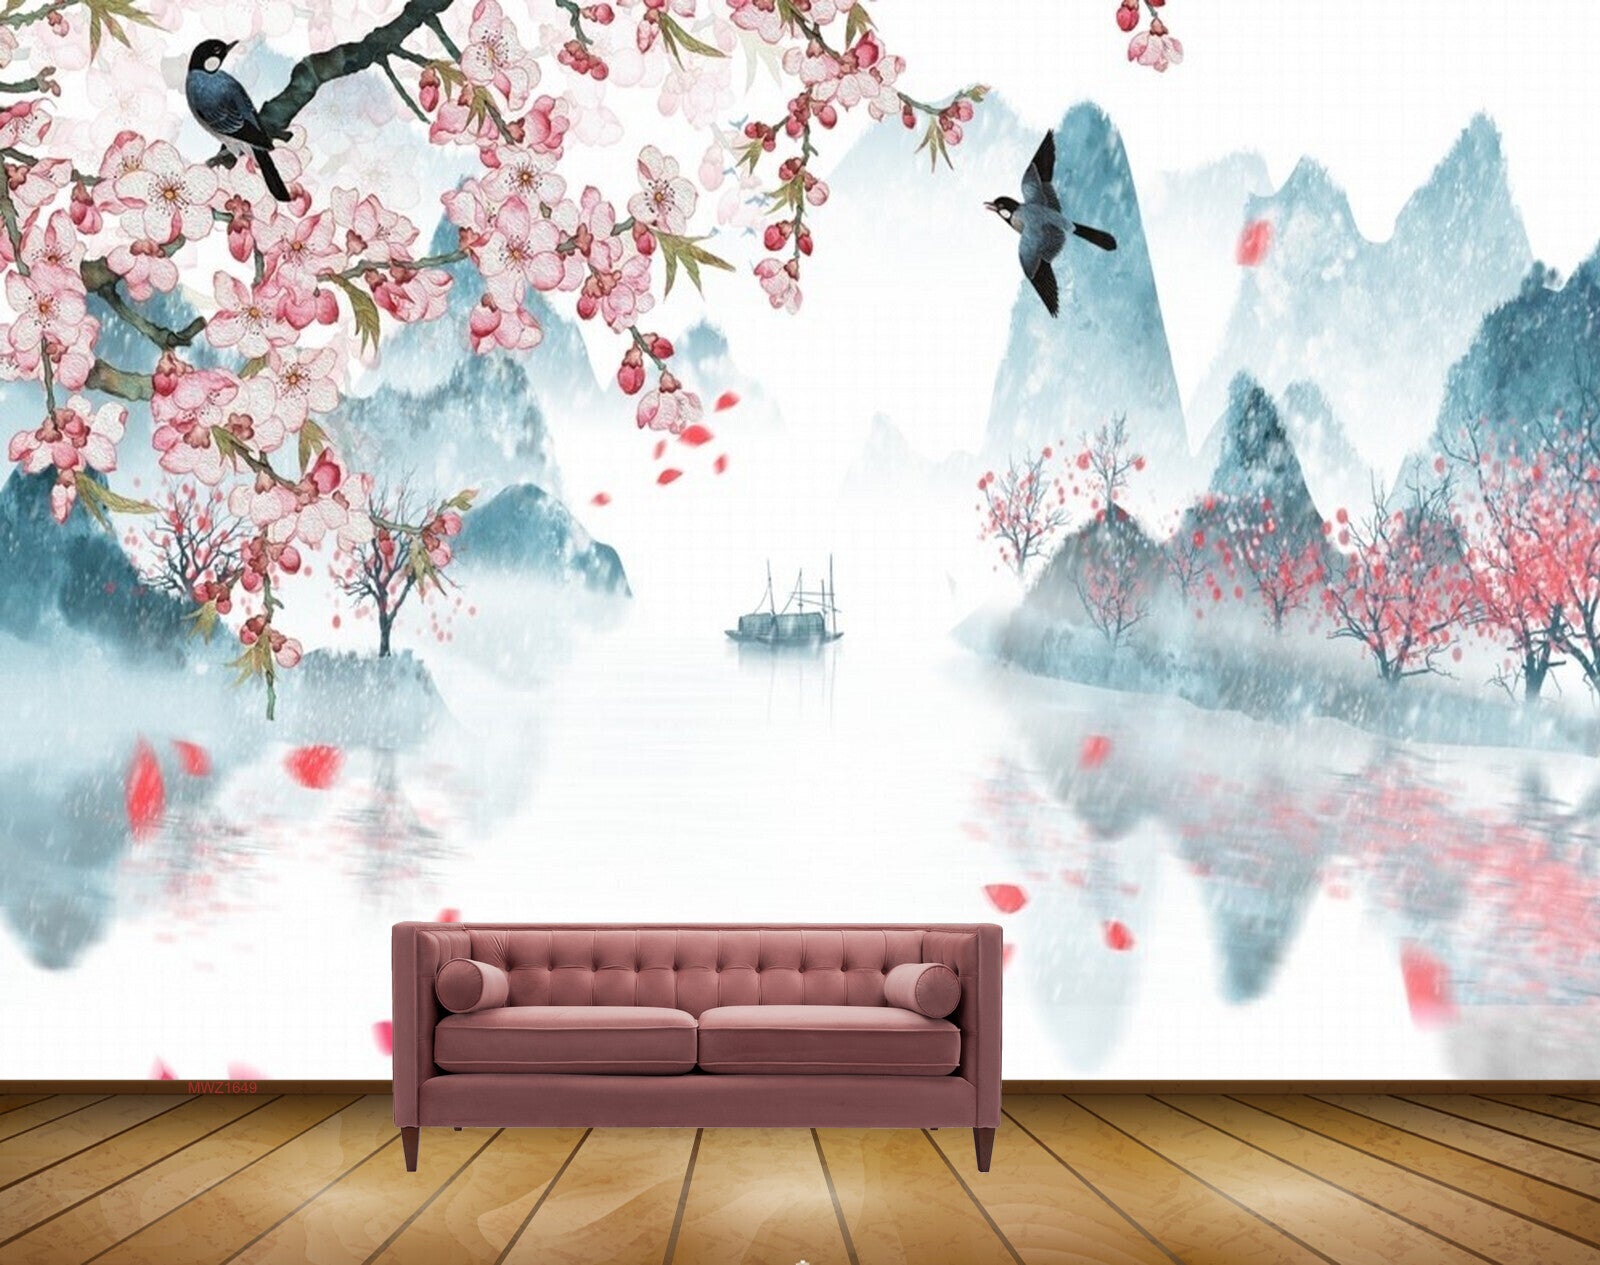 Avikalp MWZ1649 White Pink Flowers Boat Birds 3D HD Wallpaper